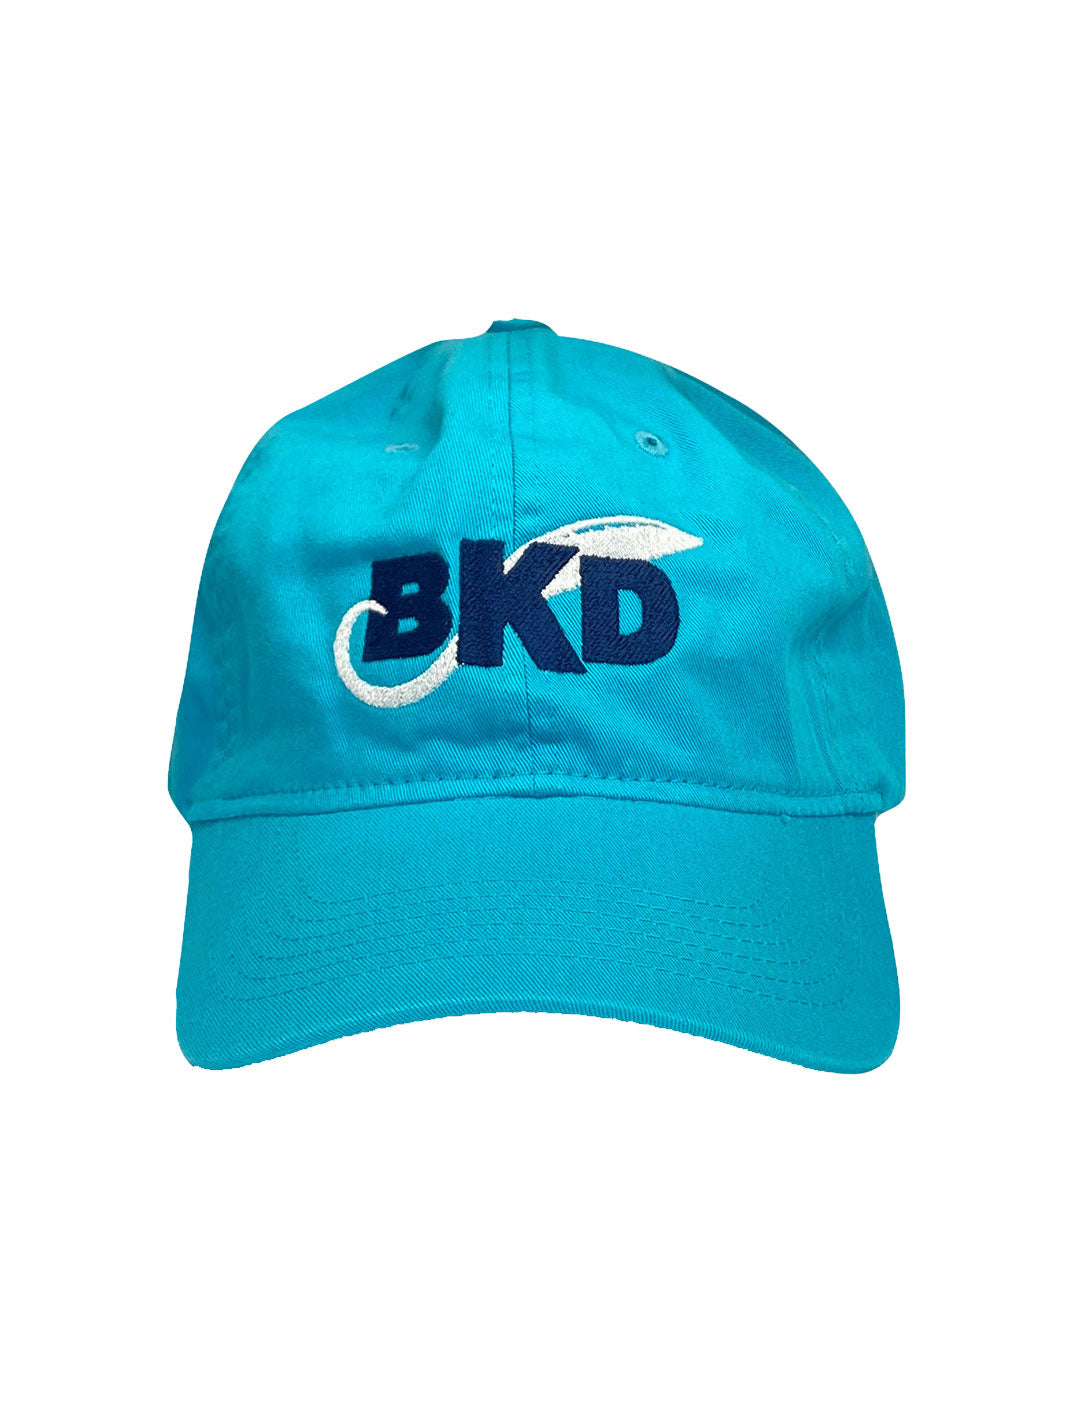 BKD Teal Dad Hat